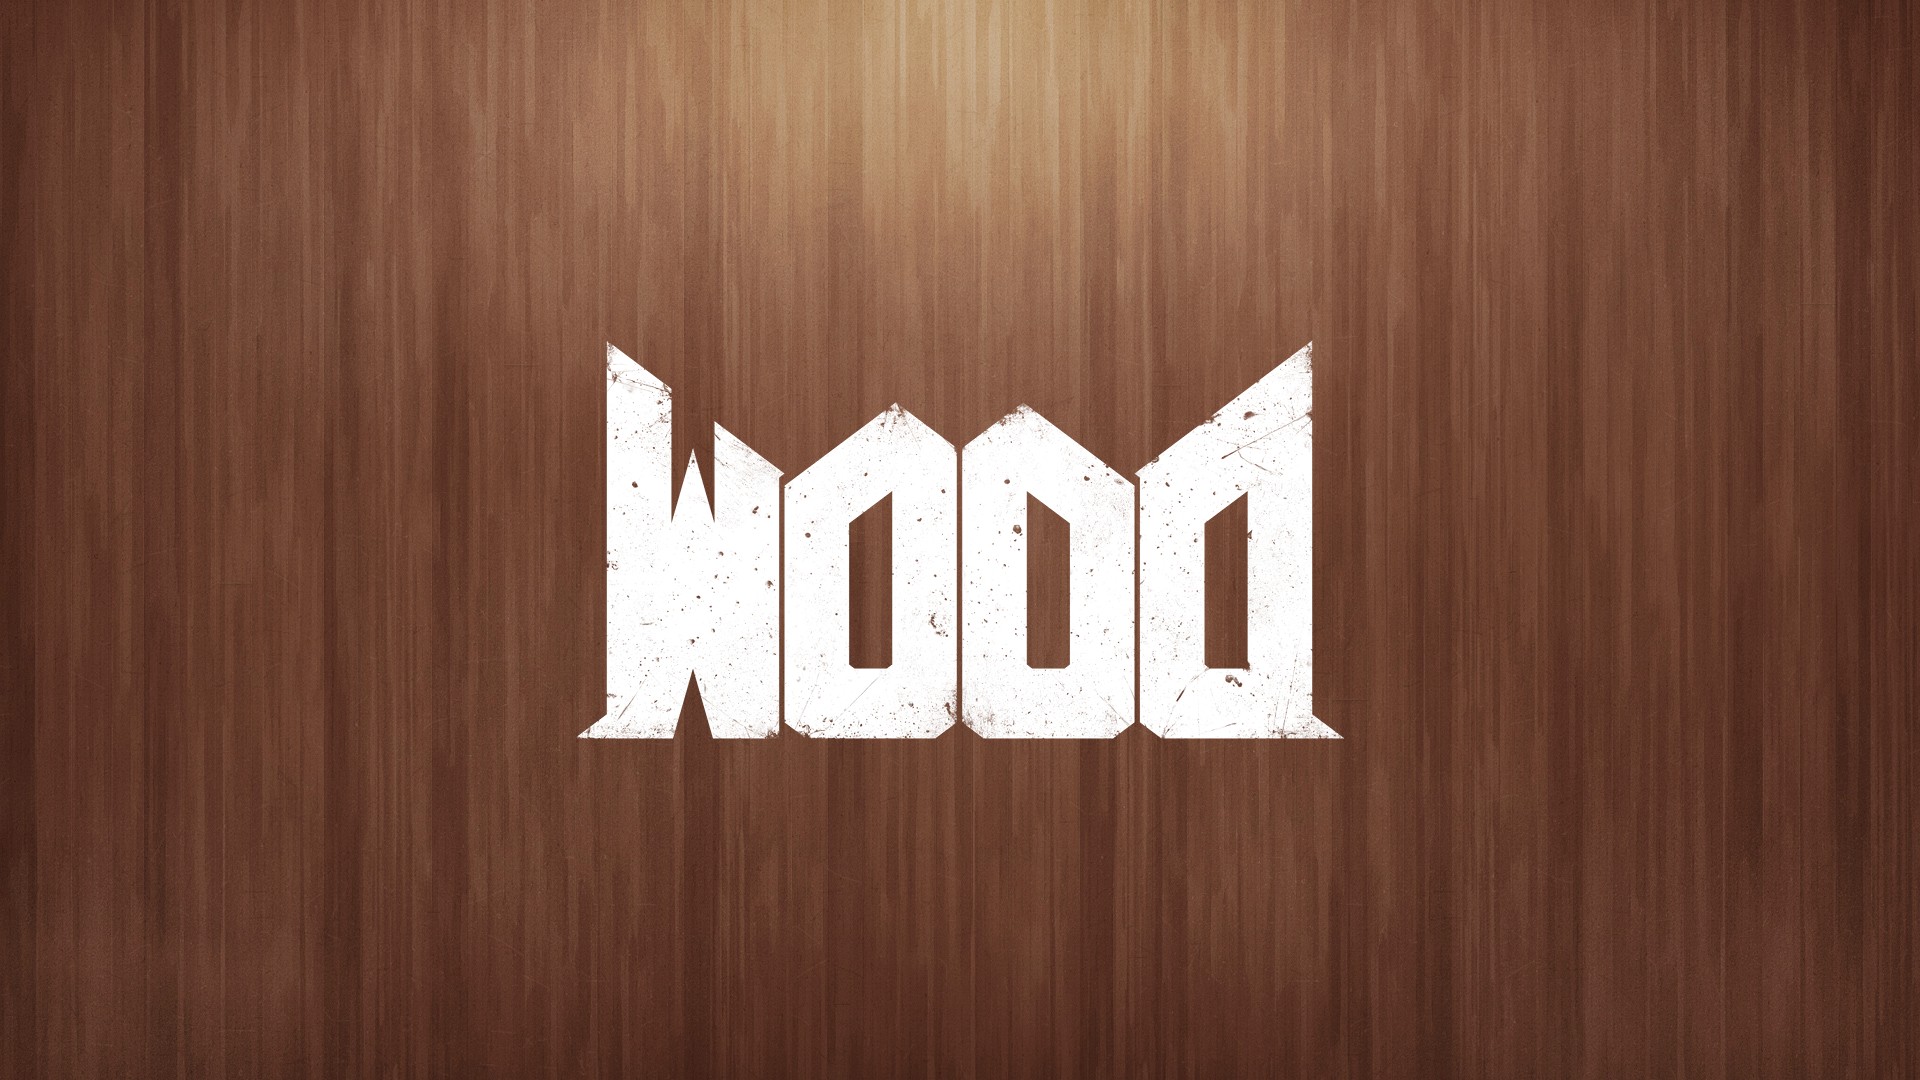 General 1920x1080 wood Doom (game) video games humor upside down letter text wooden surface digital art minimalism